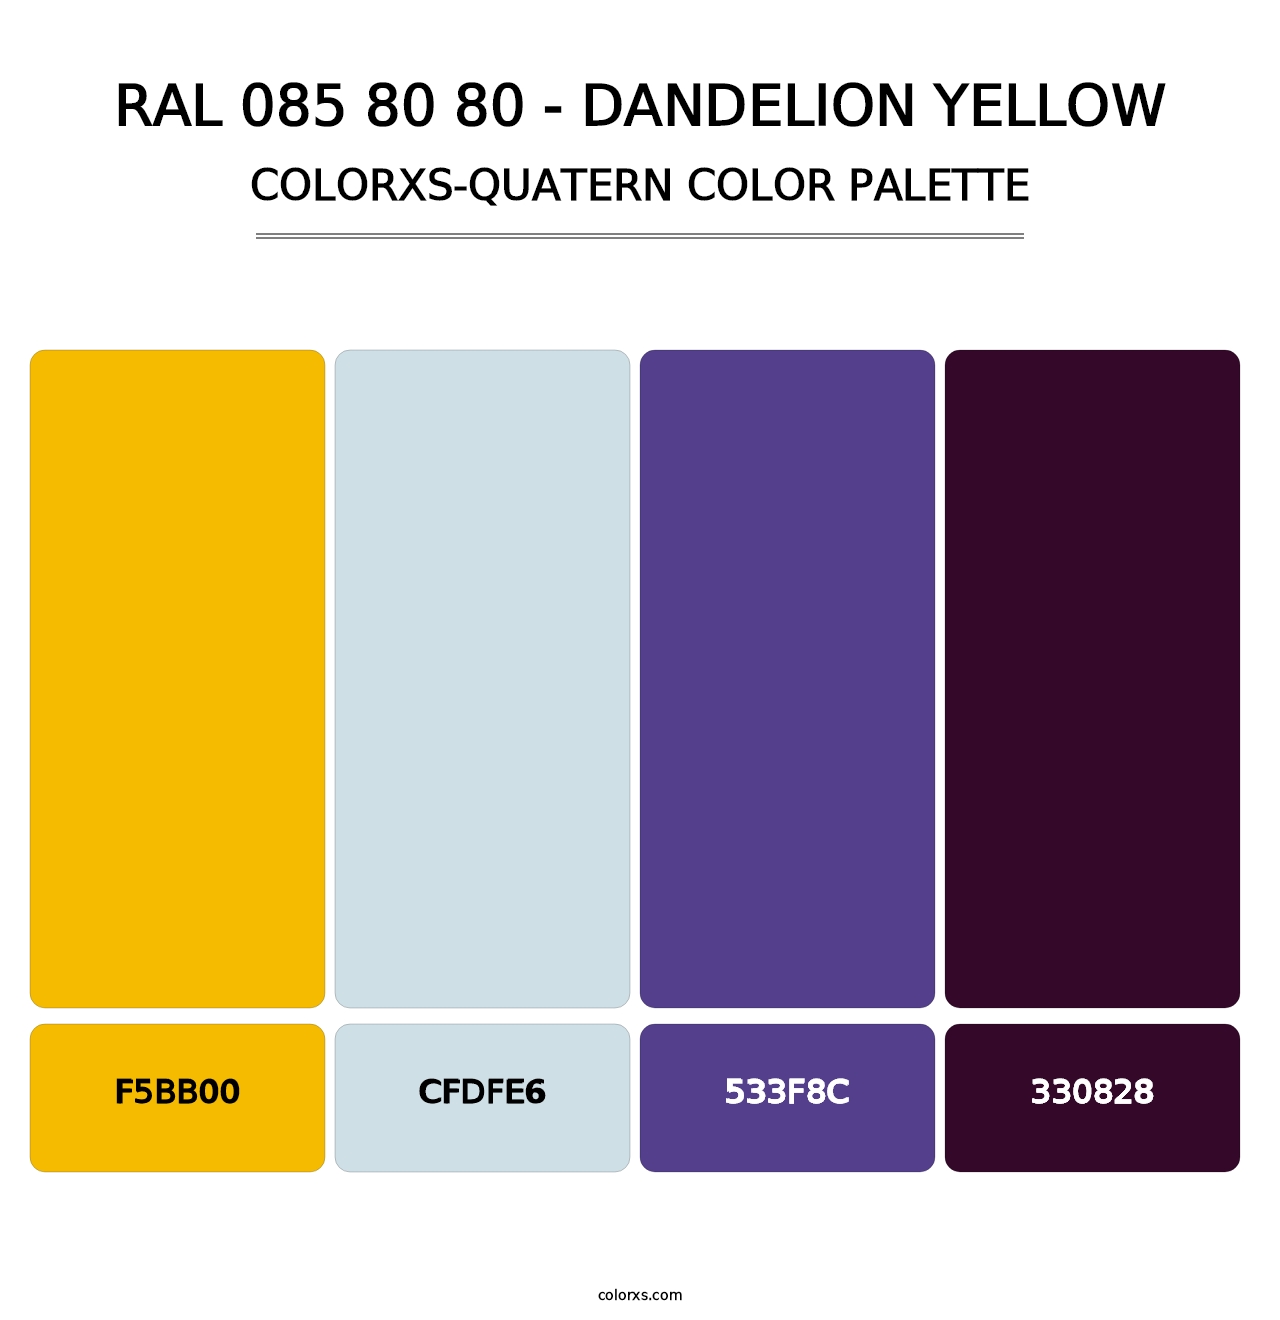 RAL 085 80 80 - Dandelion Yellow - Colorxs Quatern Palette